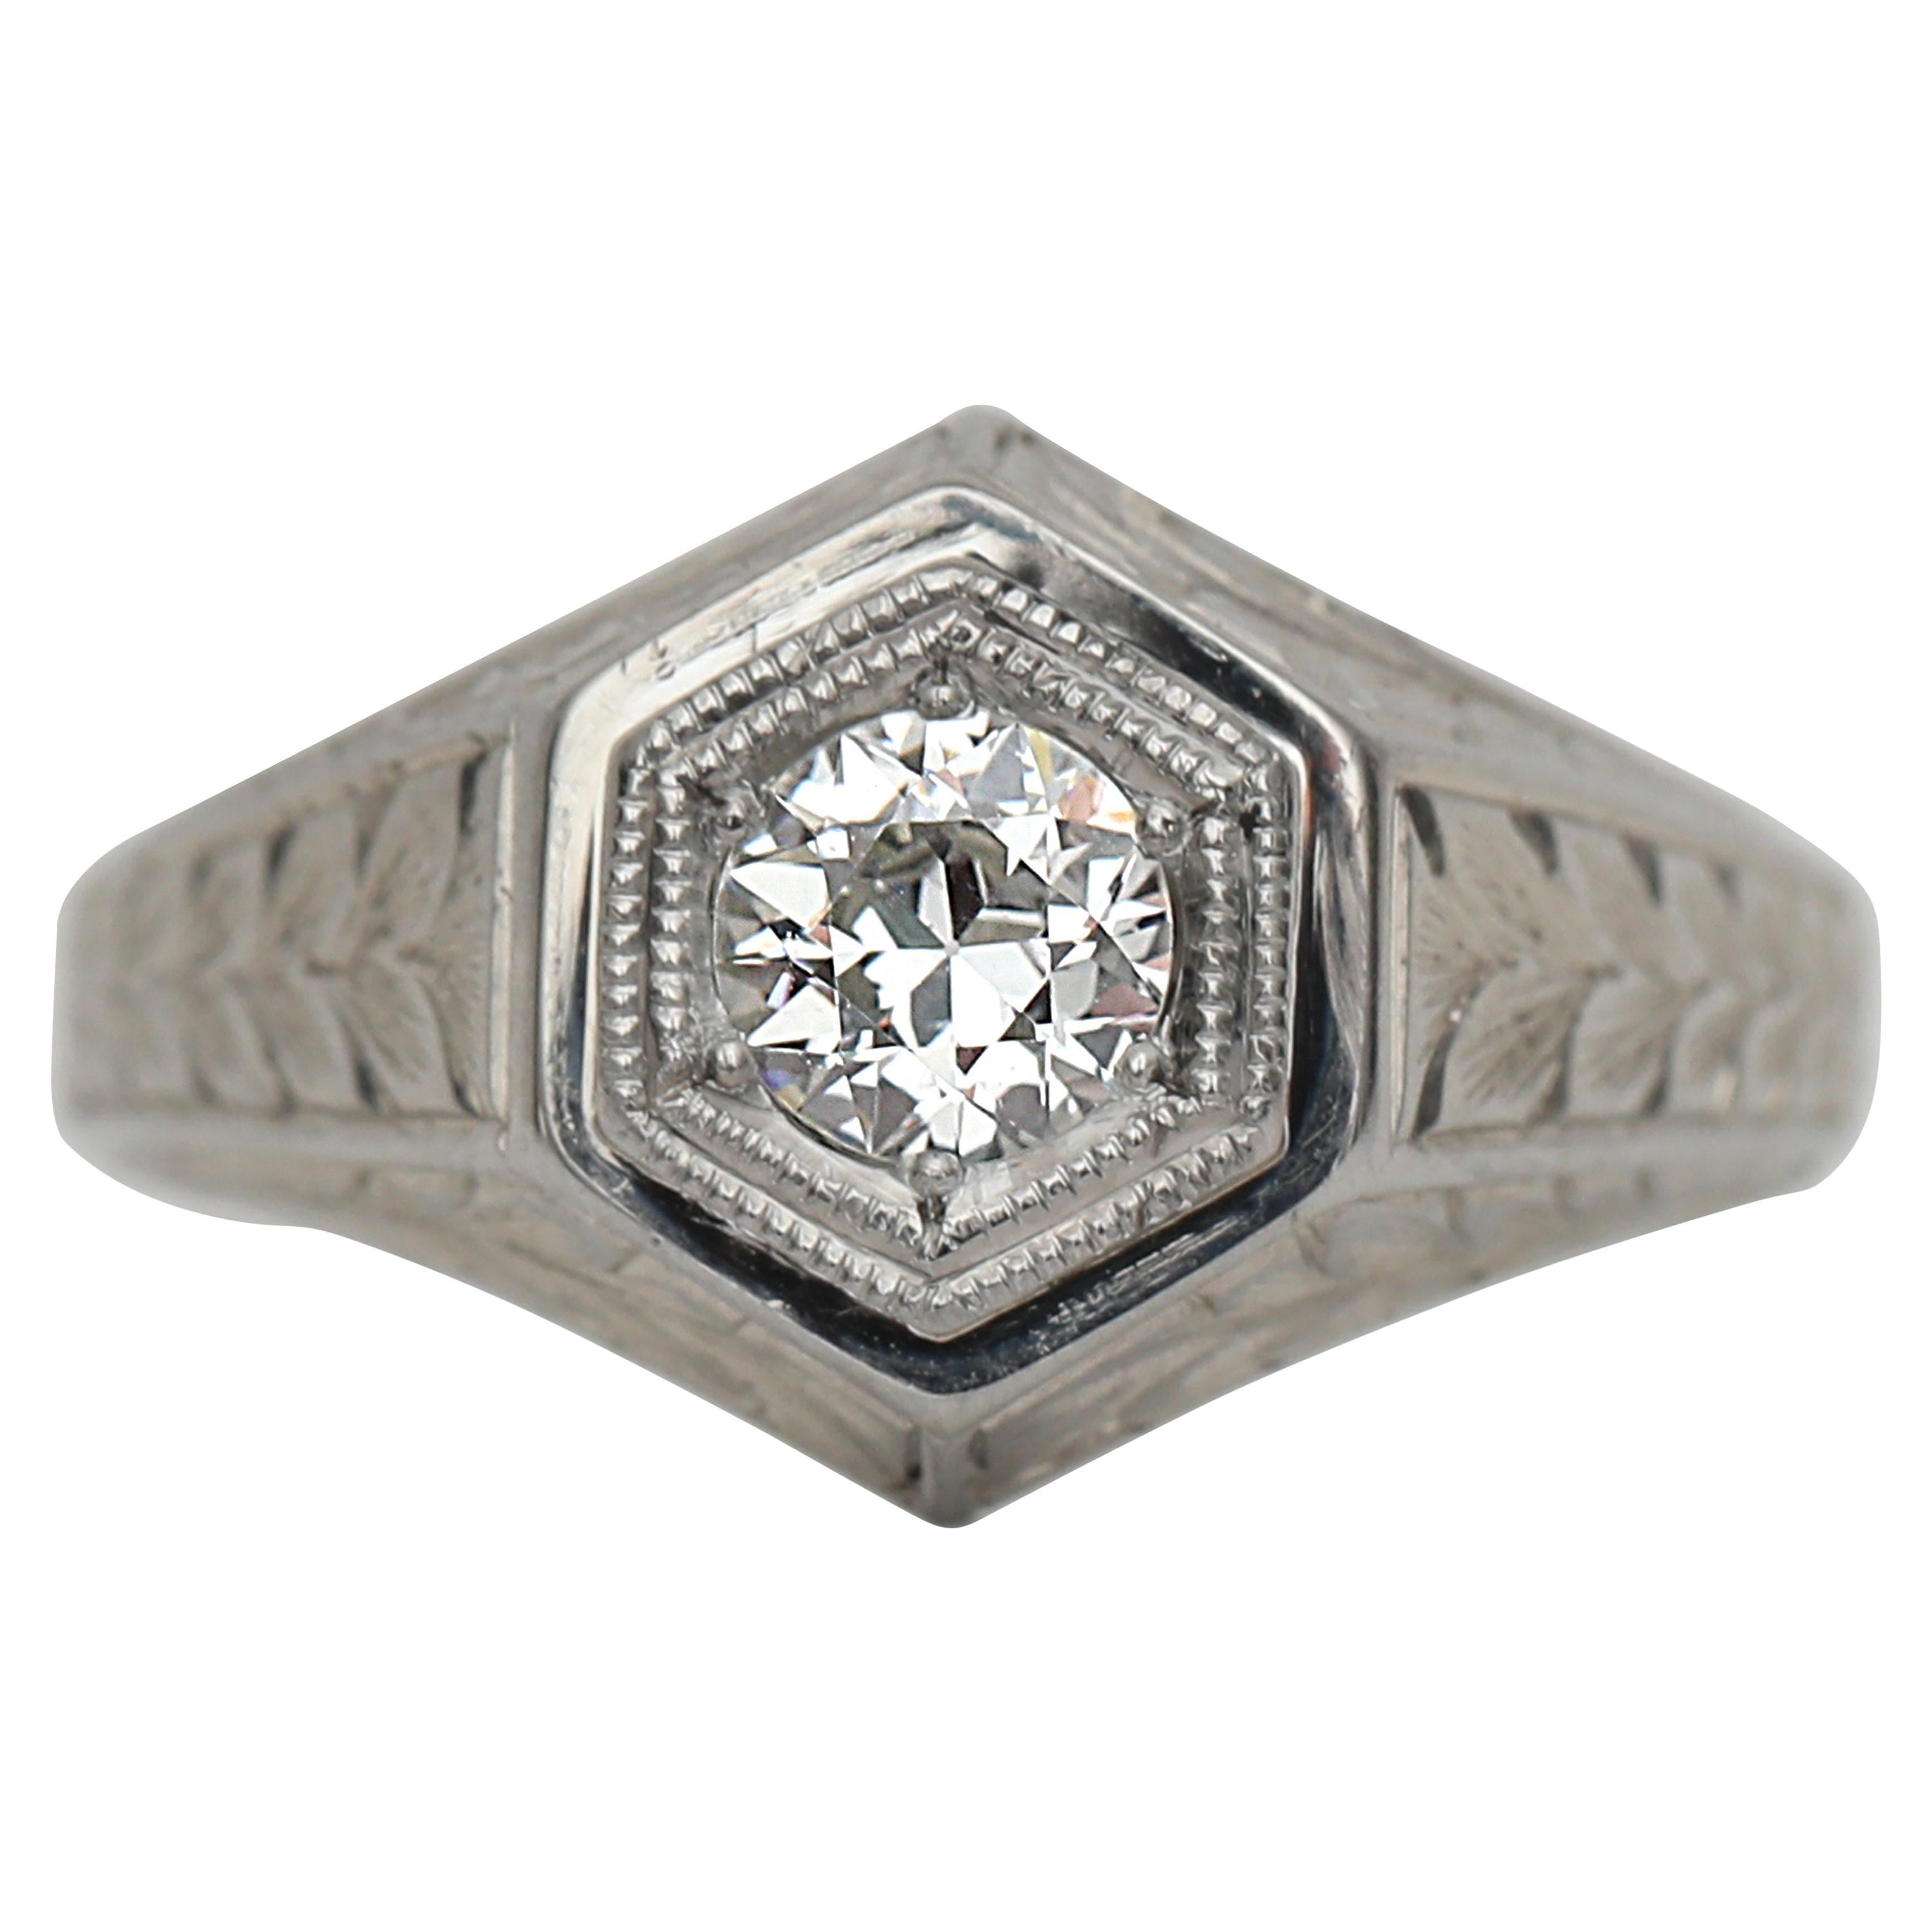 Vintage Art Deco 18 Karat Gold Diamond Engraved Engagement Ring, circa 1920s